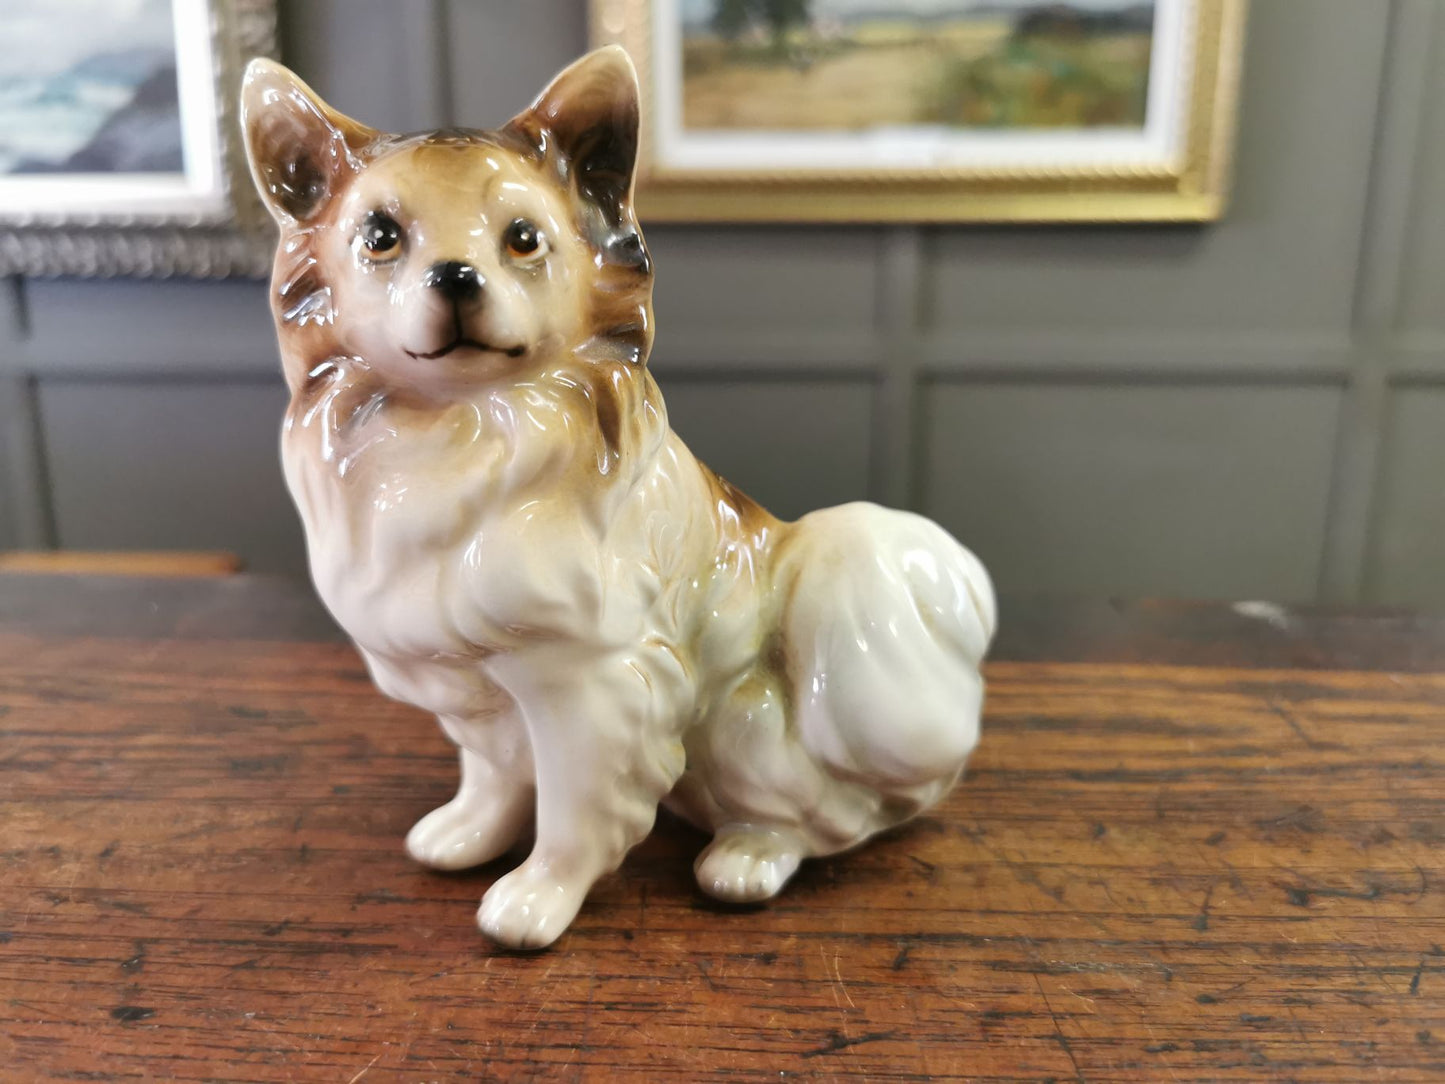 Ceramic dog ornament - made in Japan